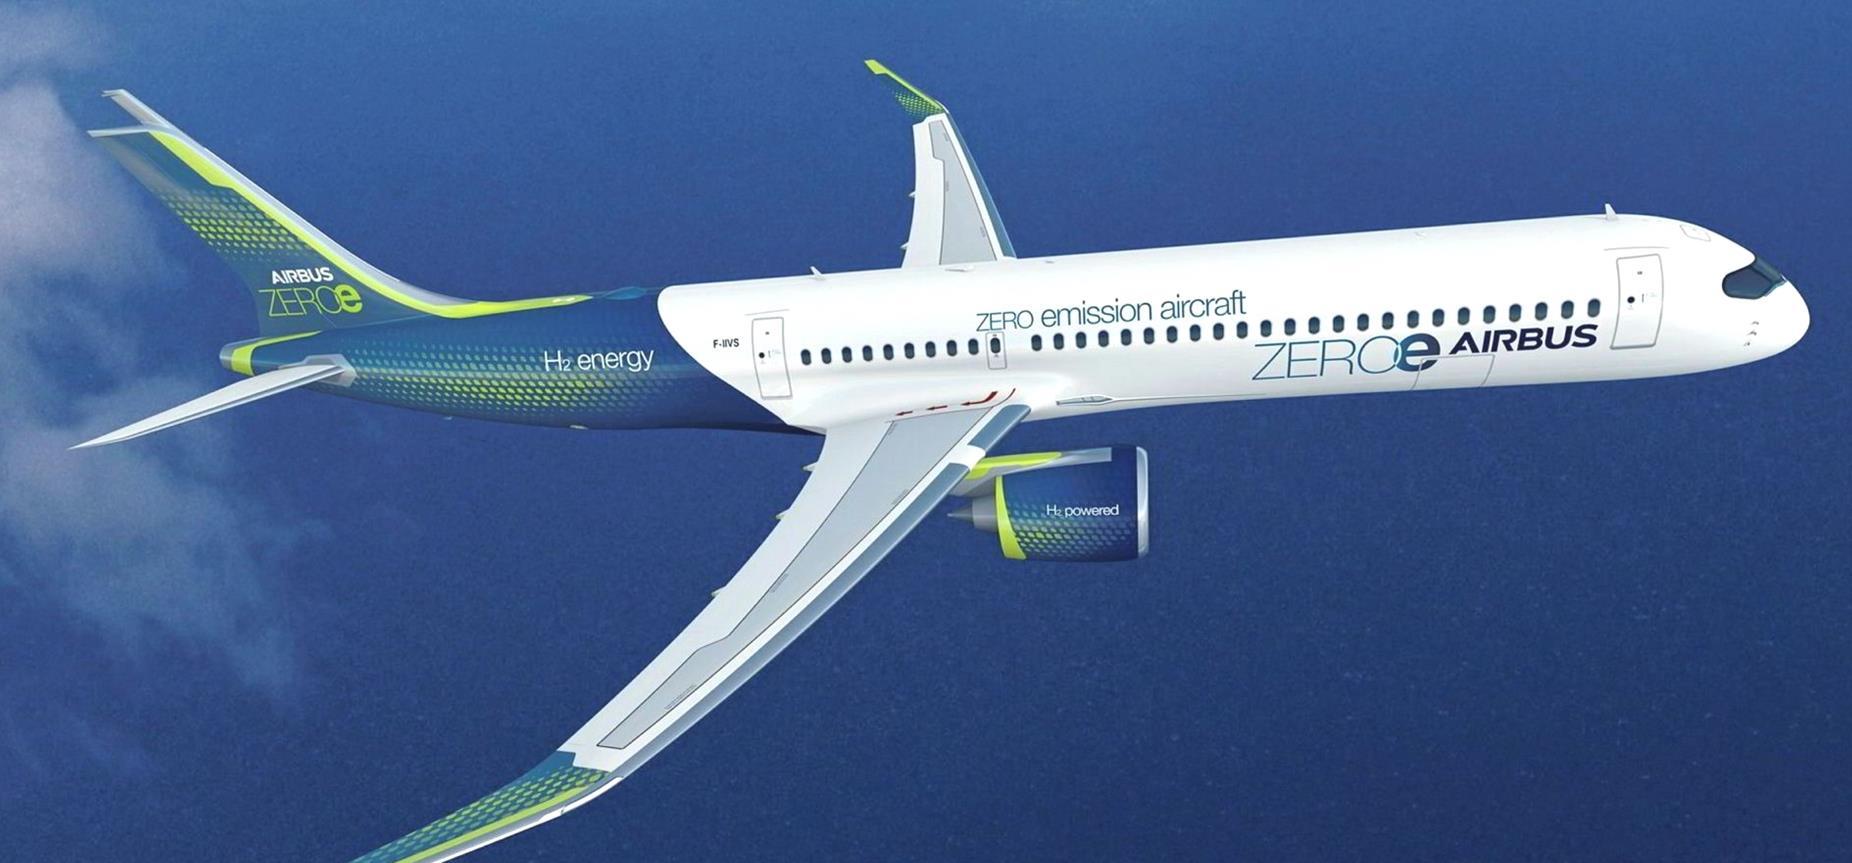 Airbus prevoit de developper une solution pour la propulsion a w092eCJ 2 4